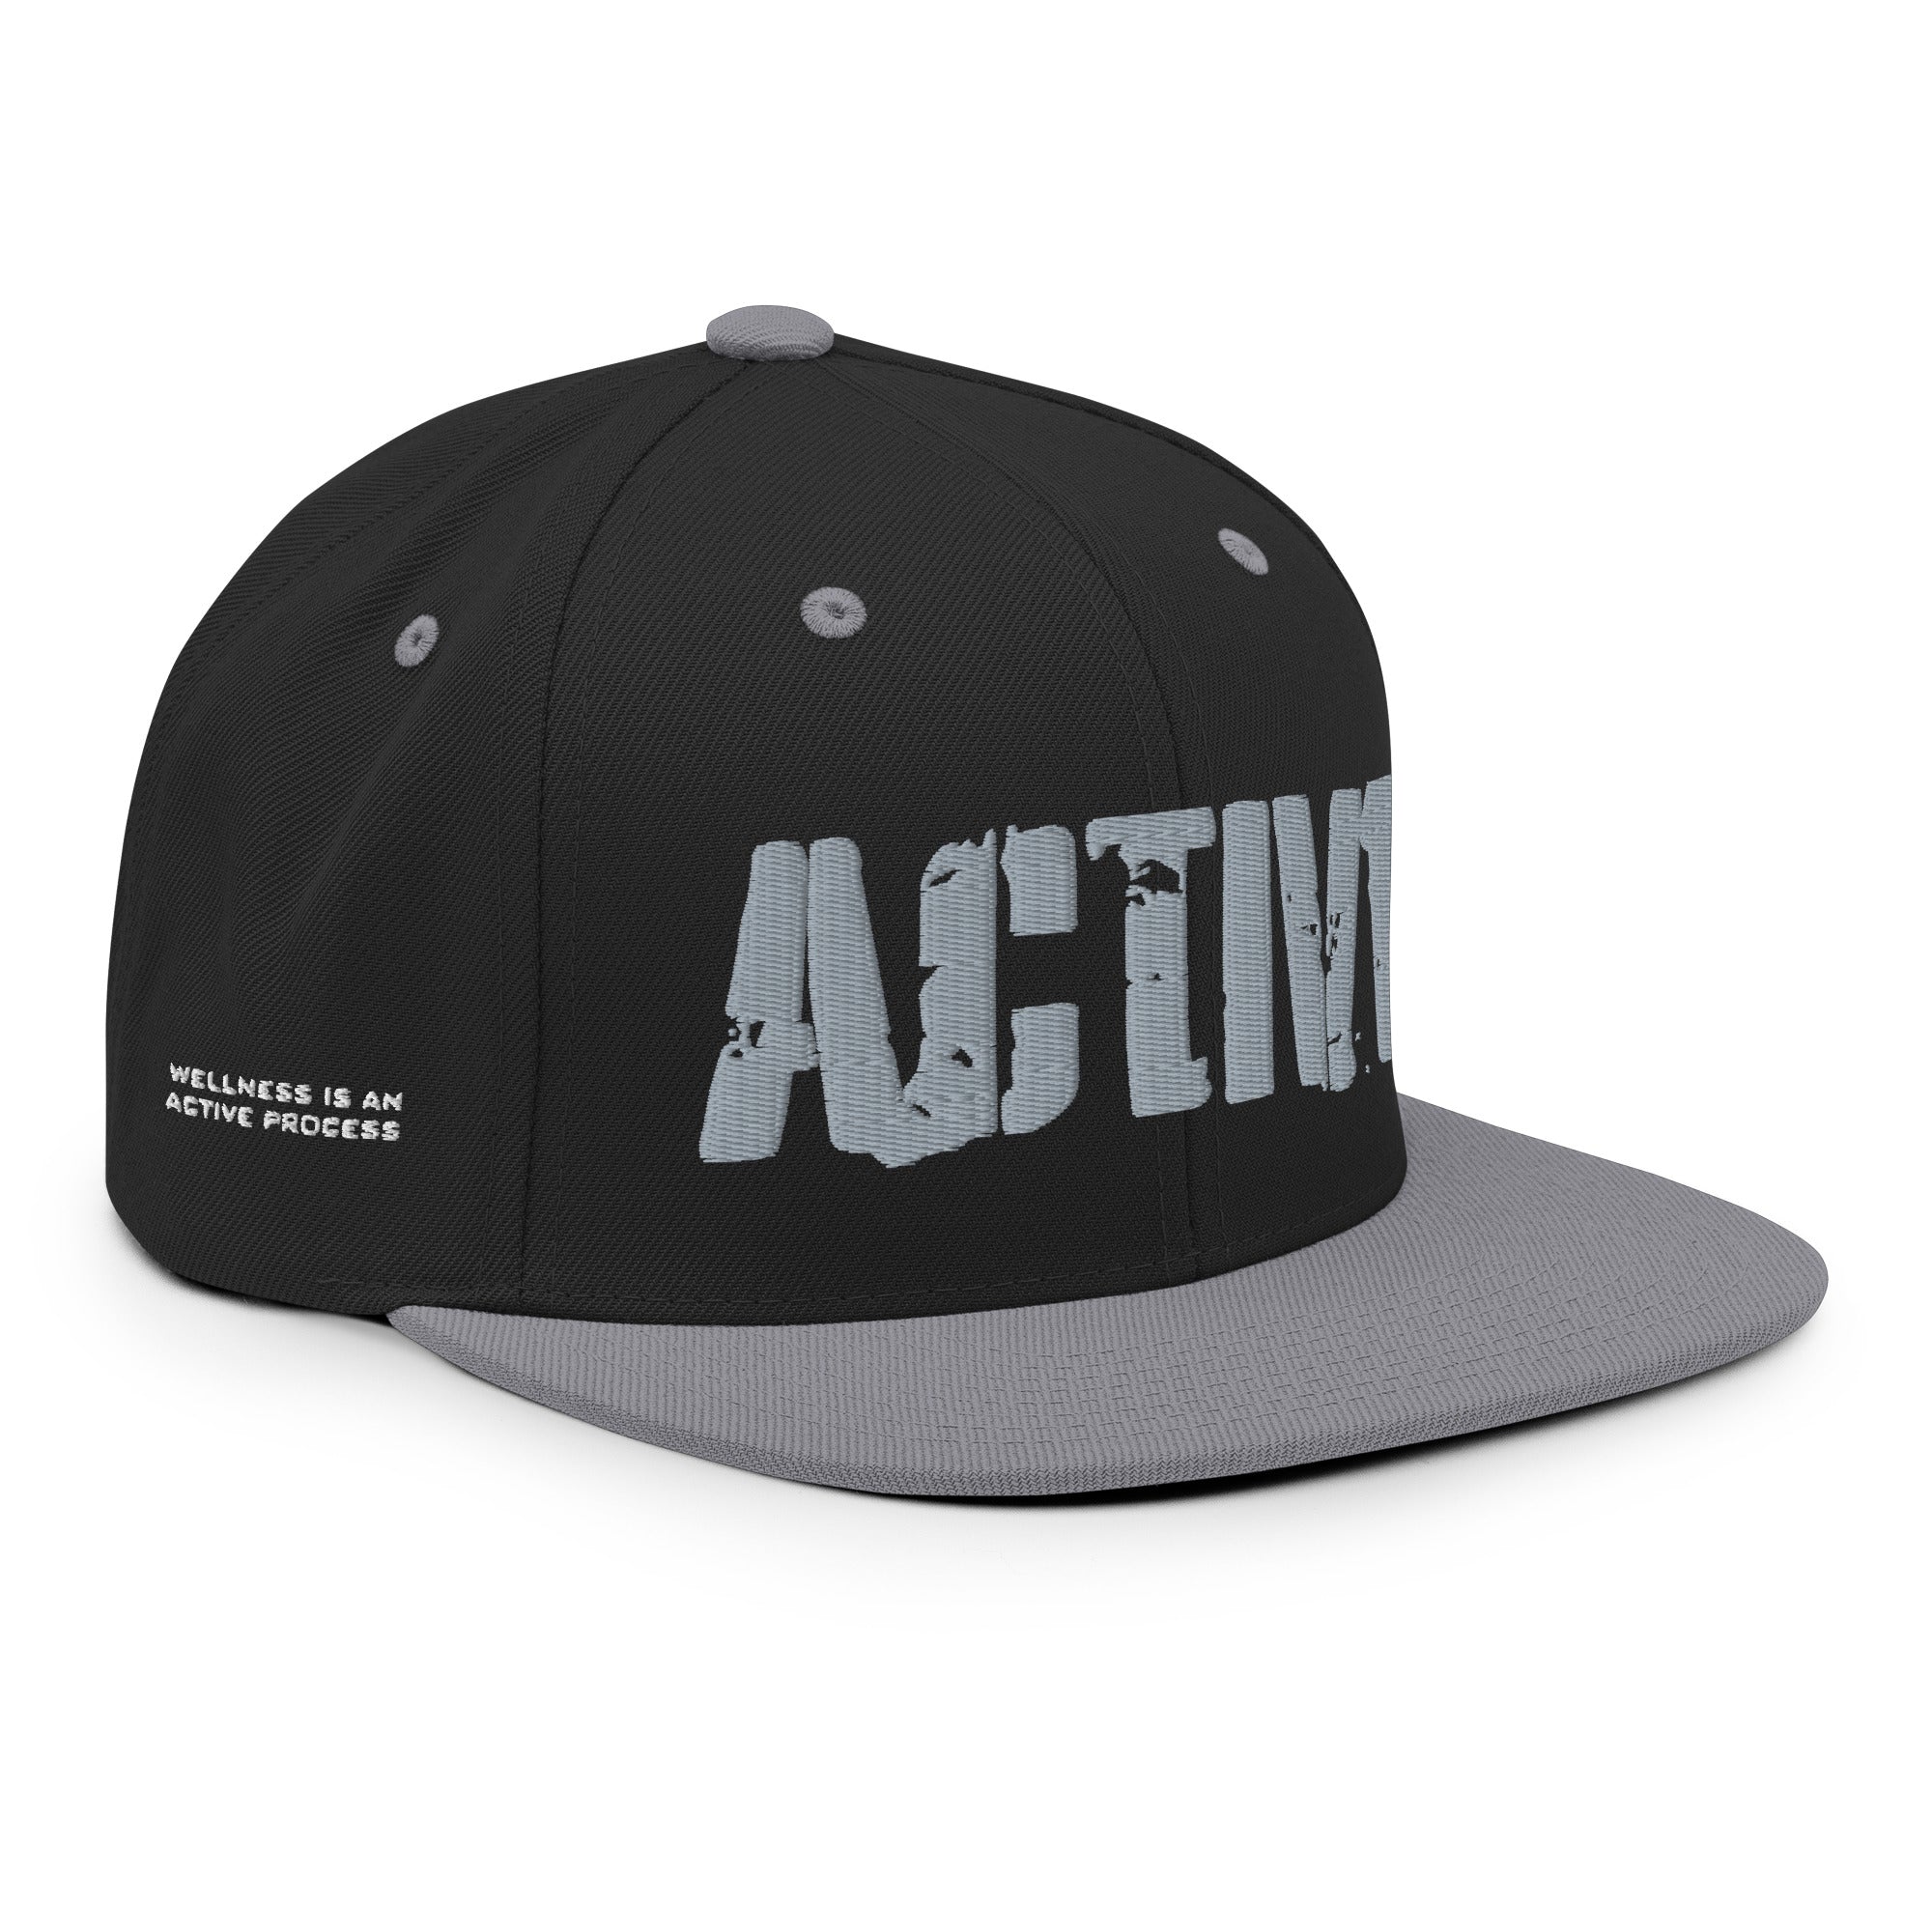 Active Snapback Hat